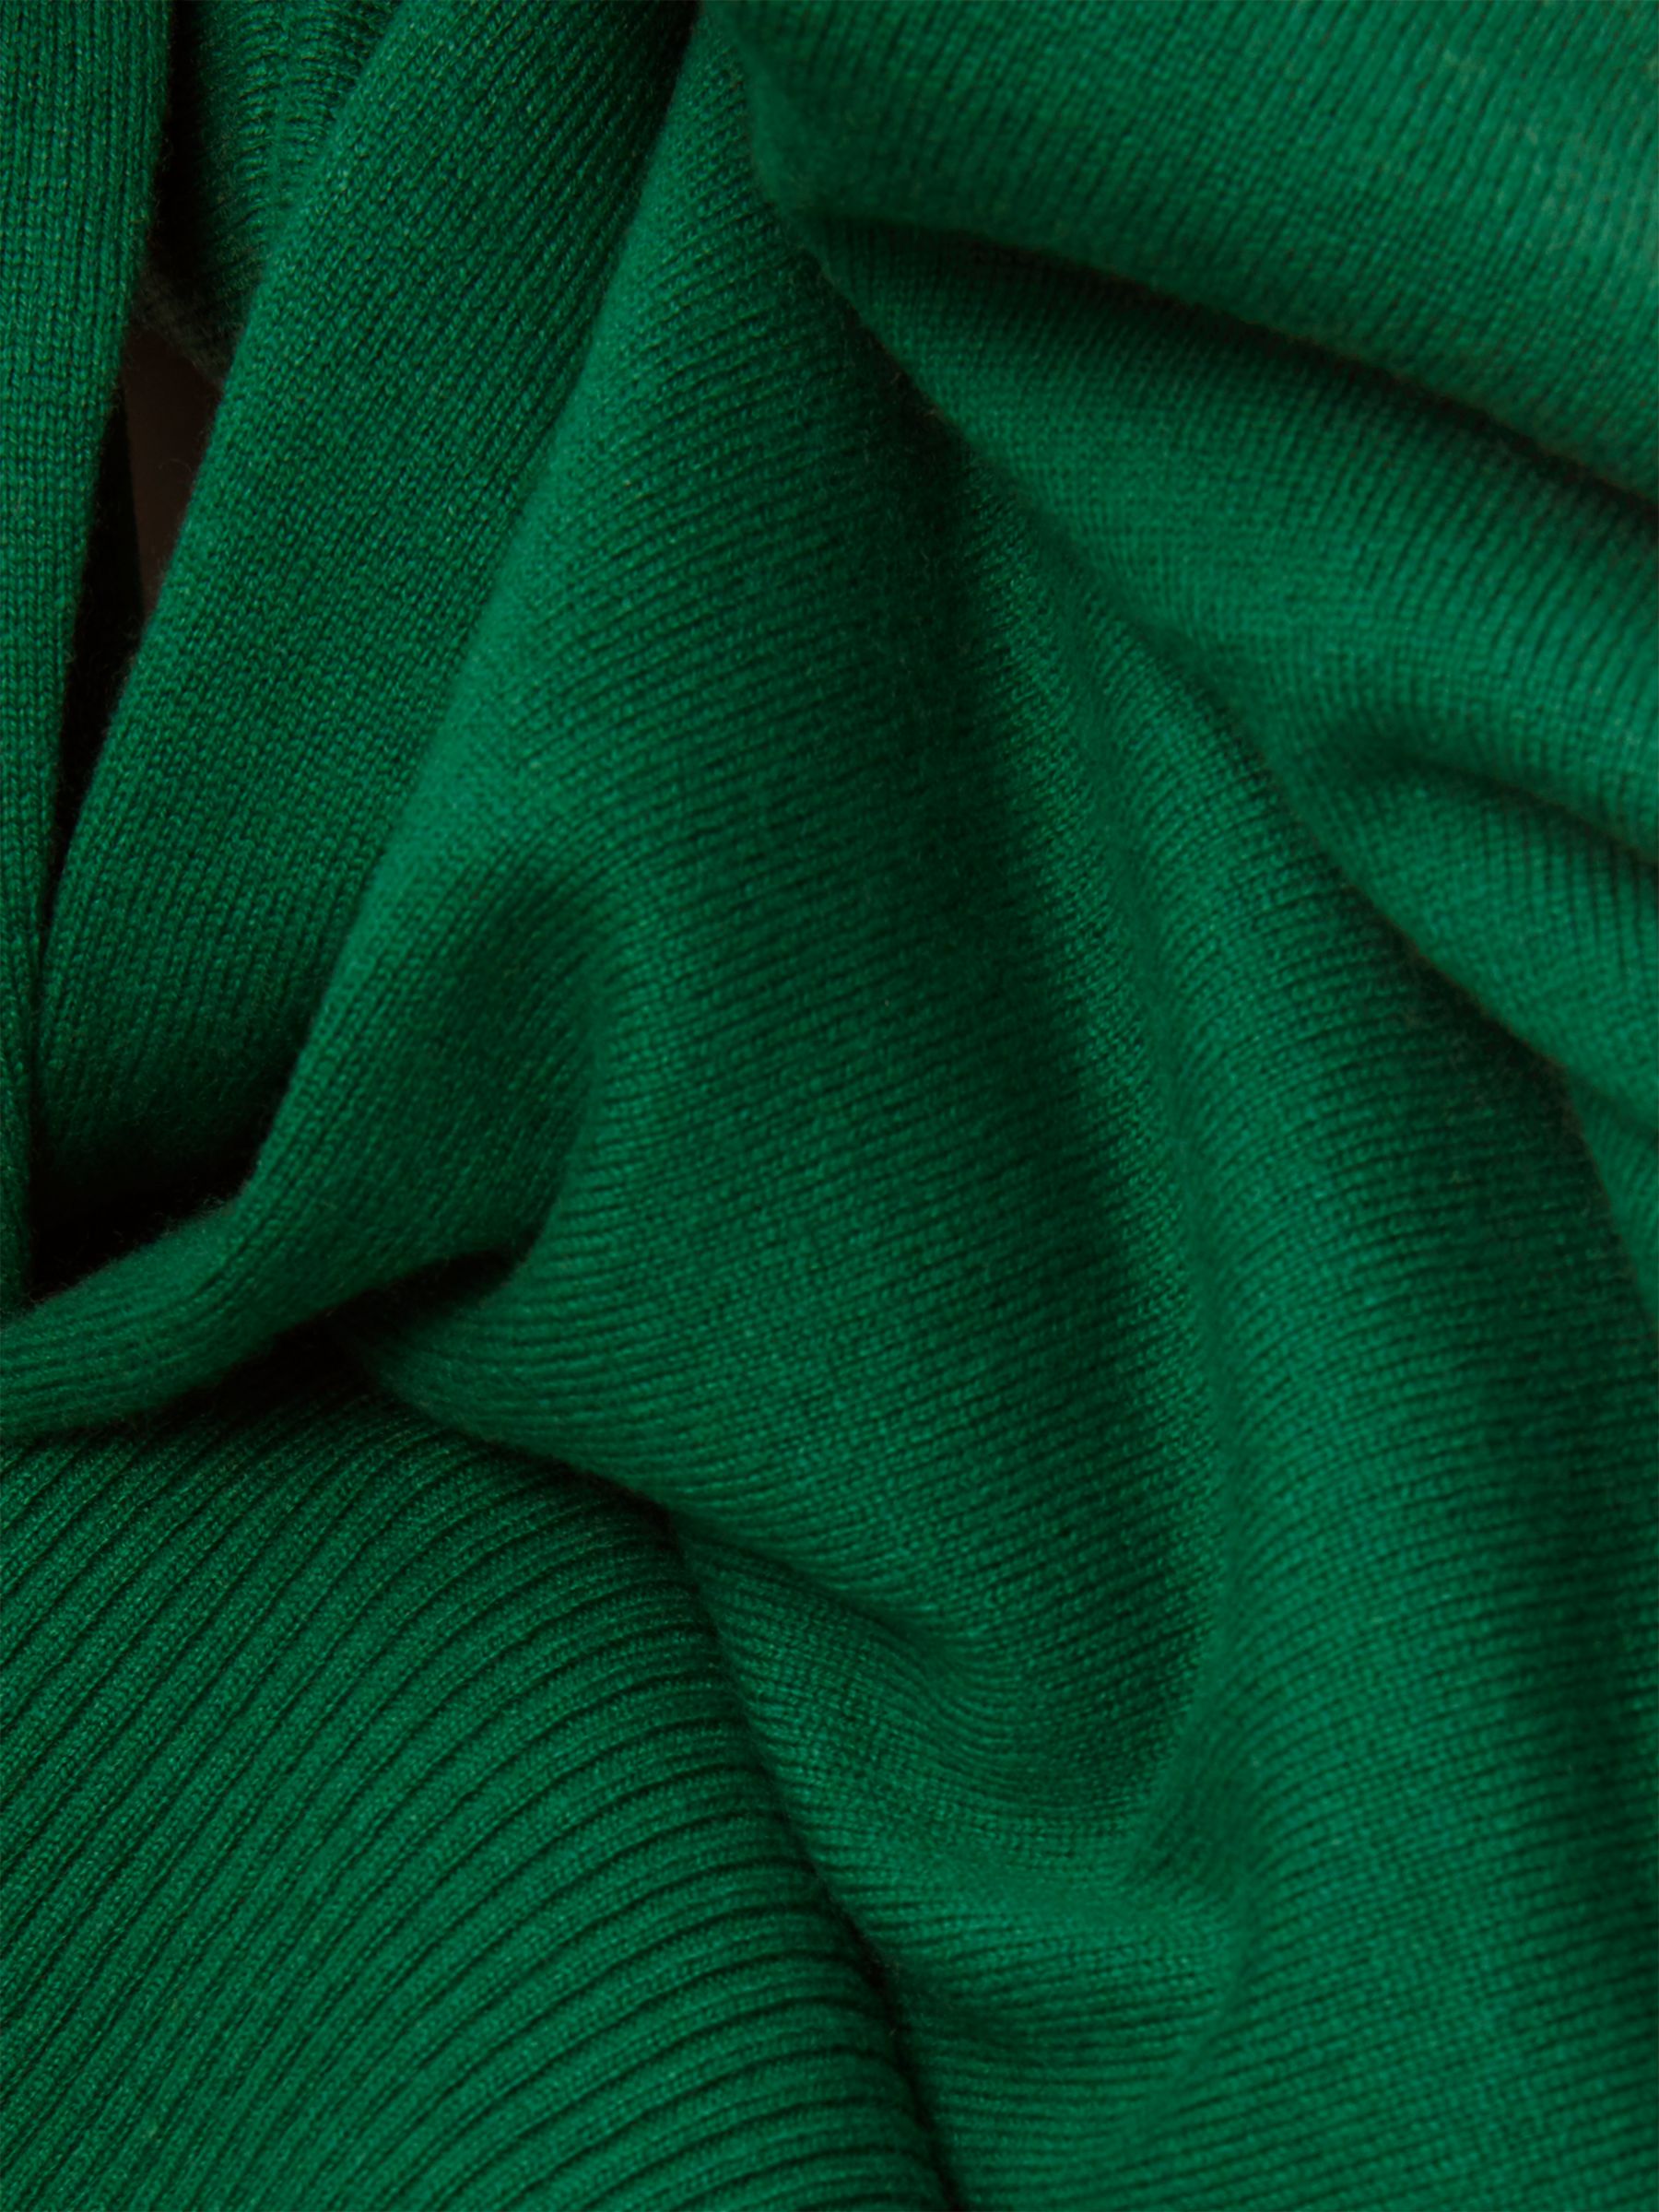 Hobbs Talia Knitted Dress, Leaf Green at John Lewis & Partners